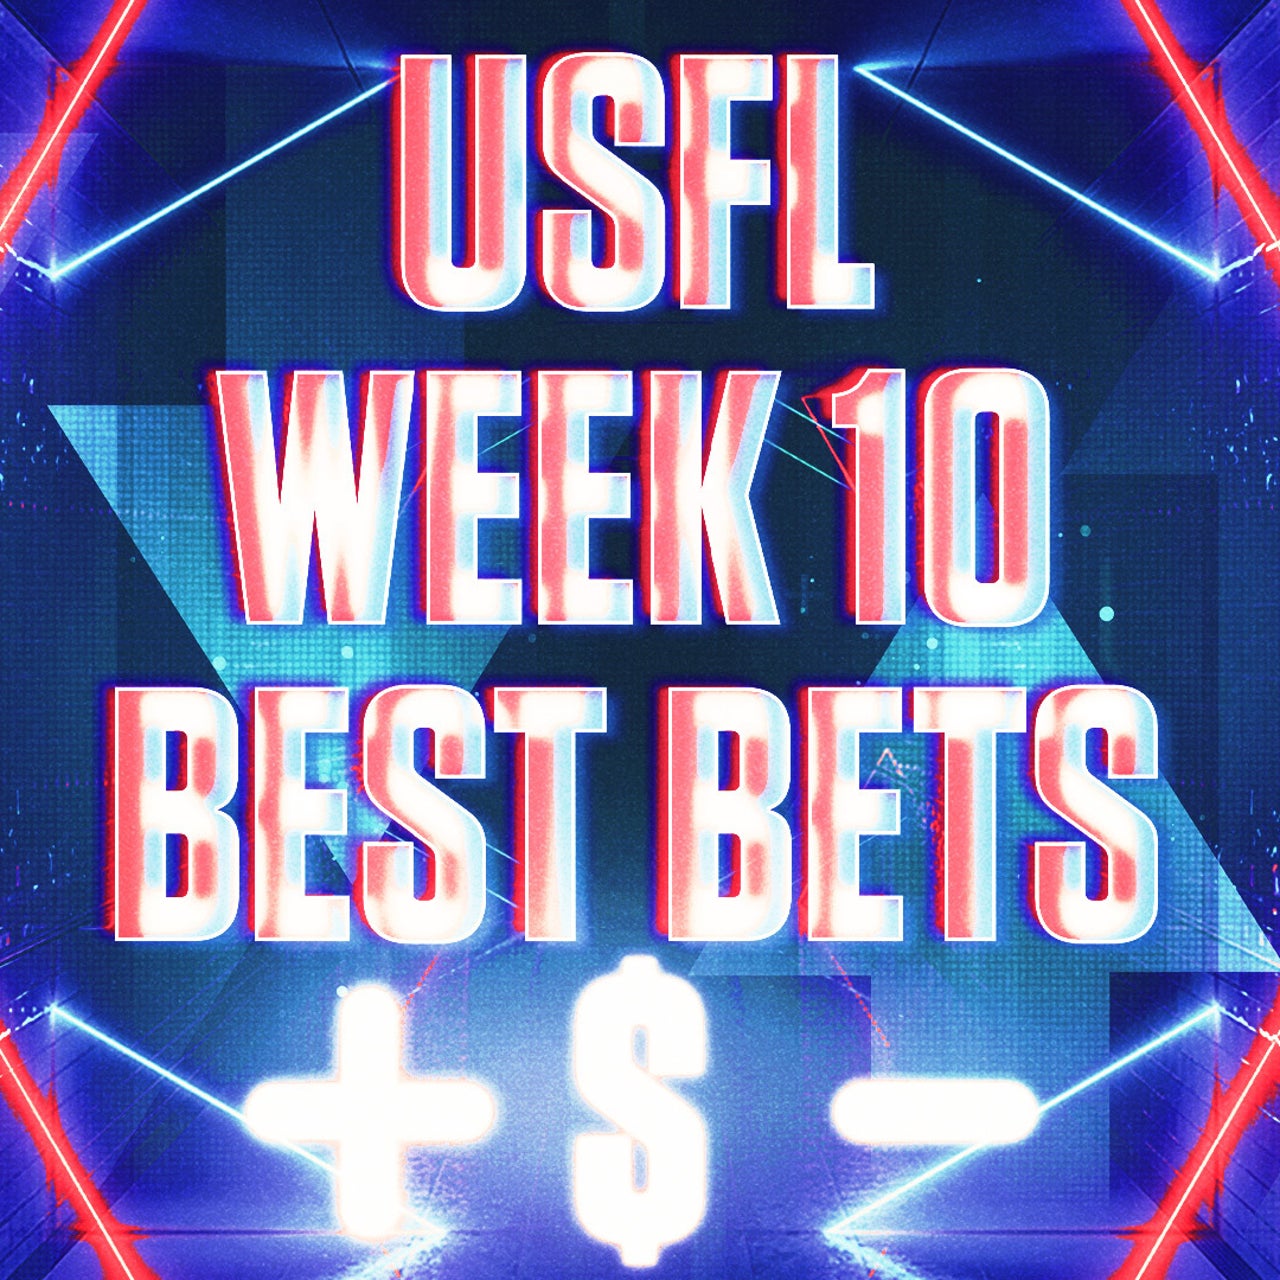 best bets week 10